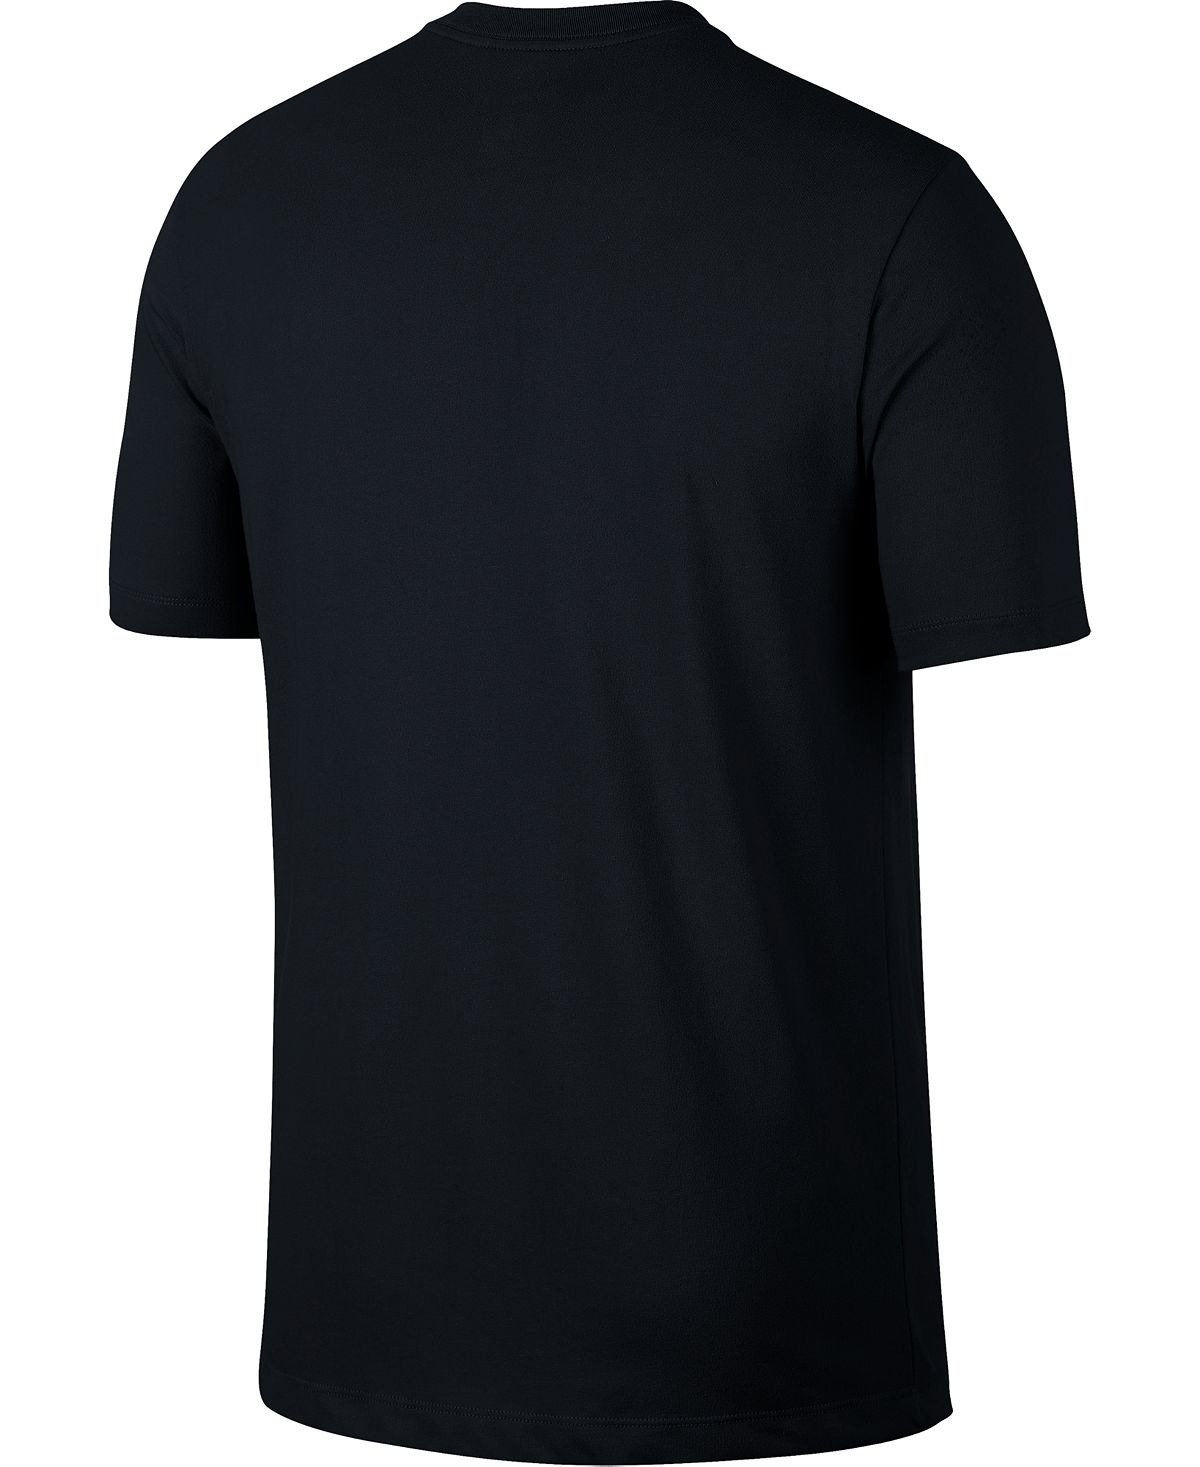 Nike Dri-fit Training T-shirt Black